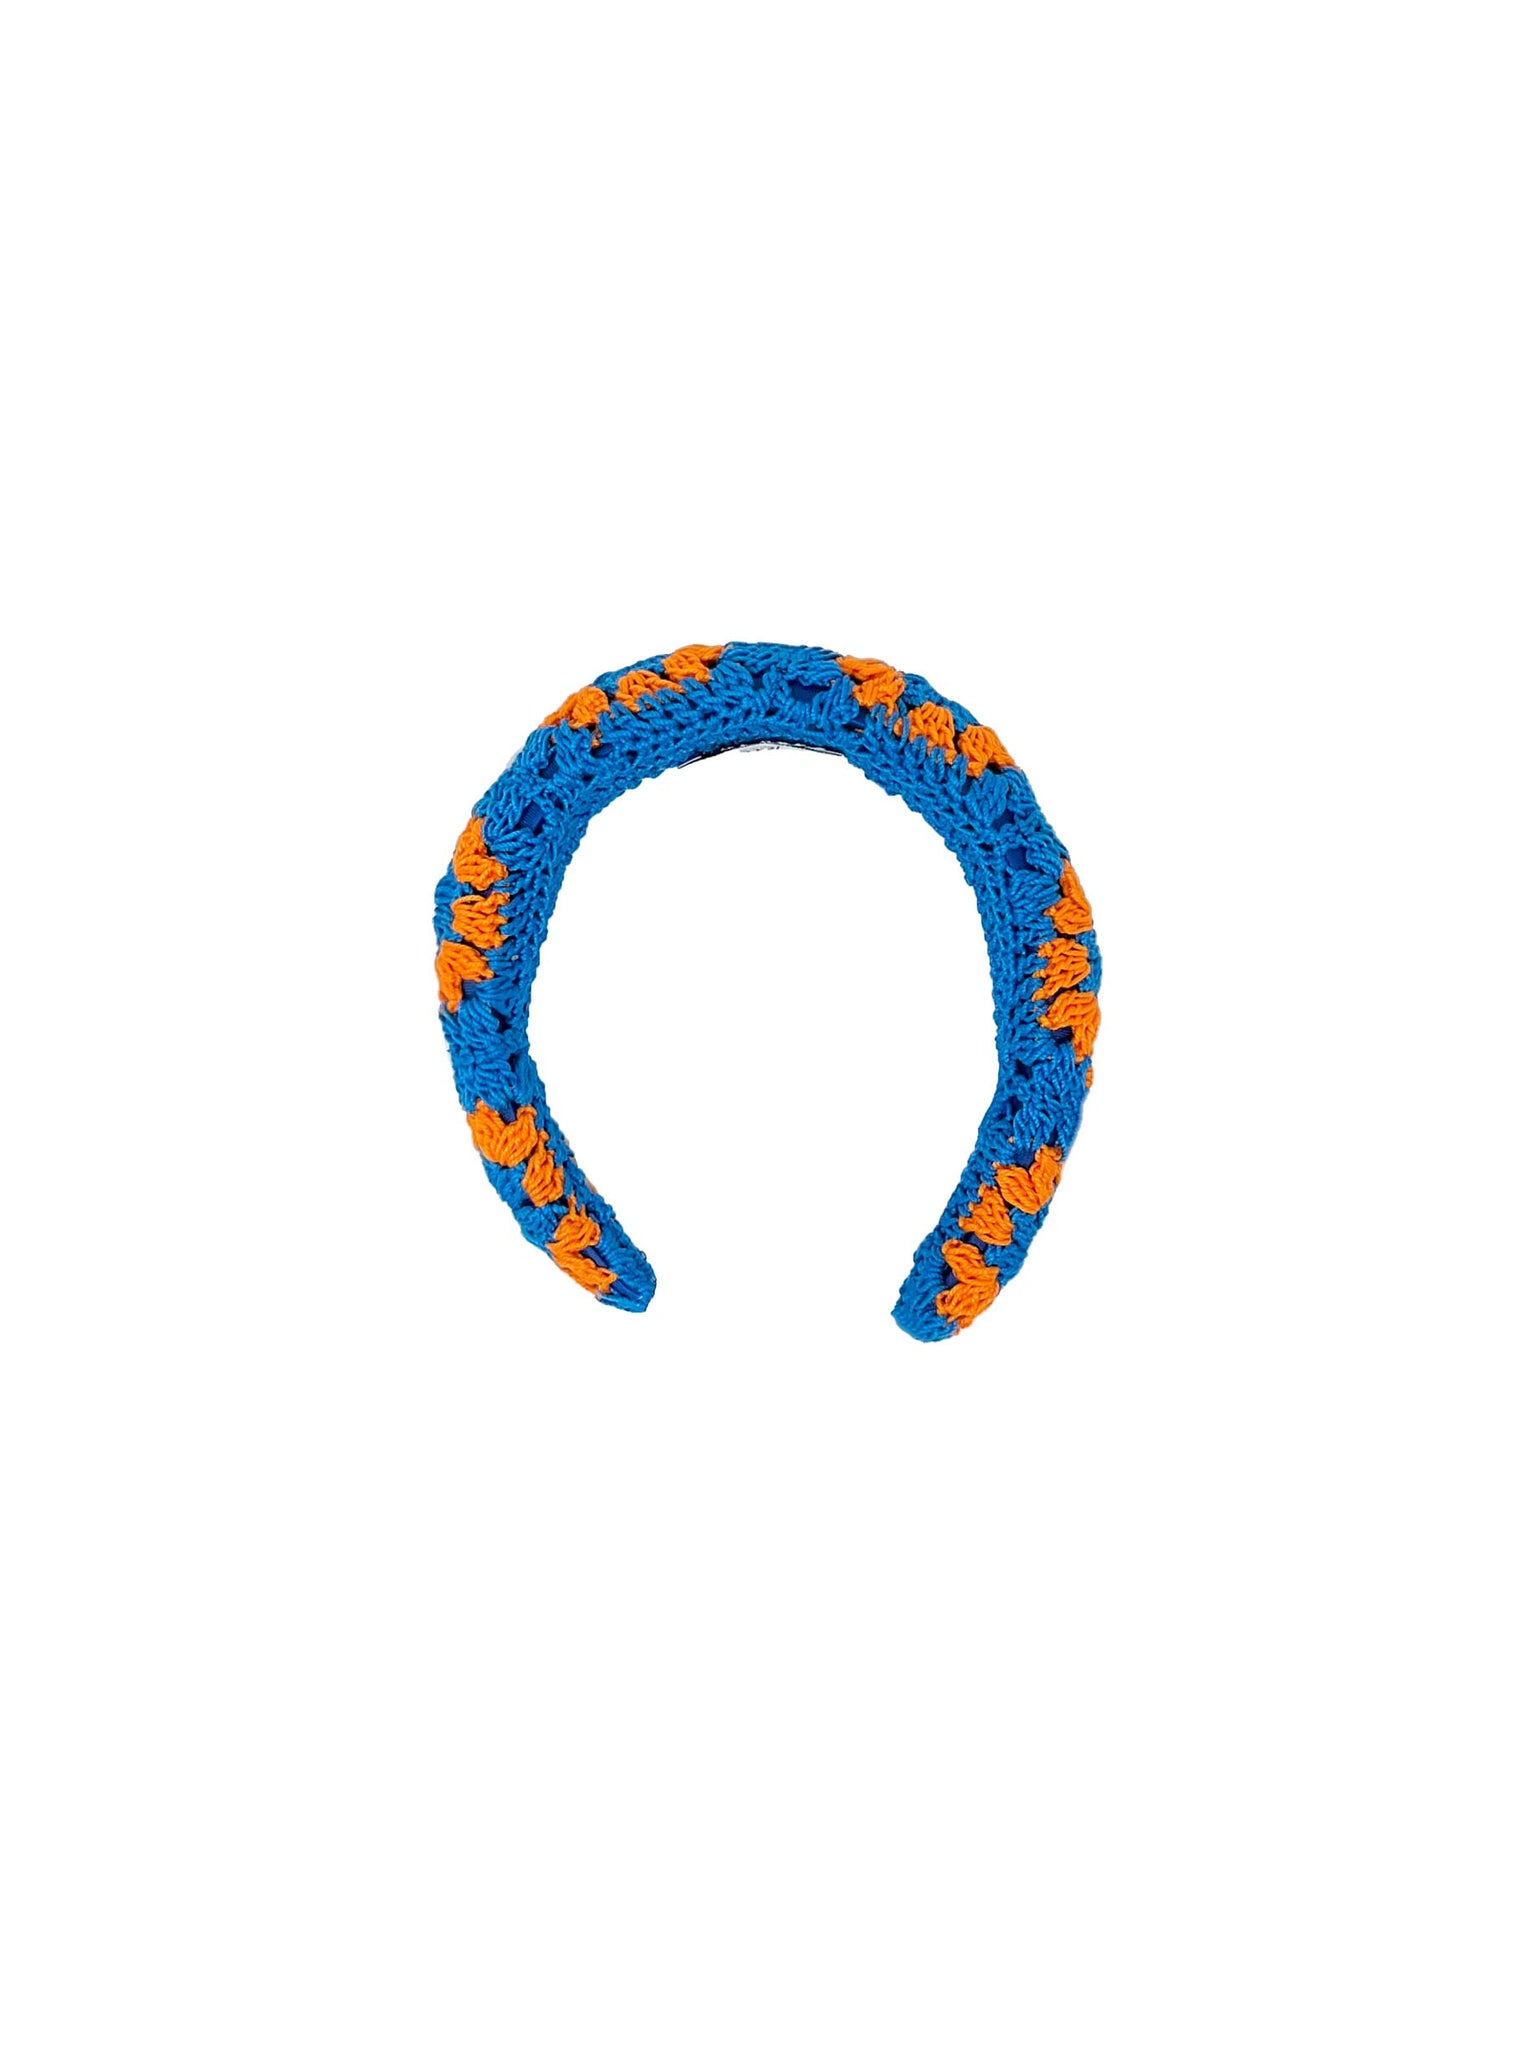 Light blue and orange crochet hairband